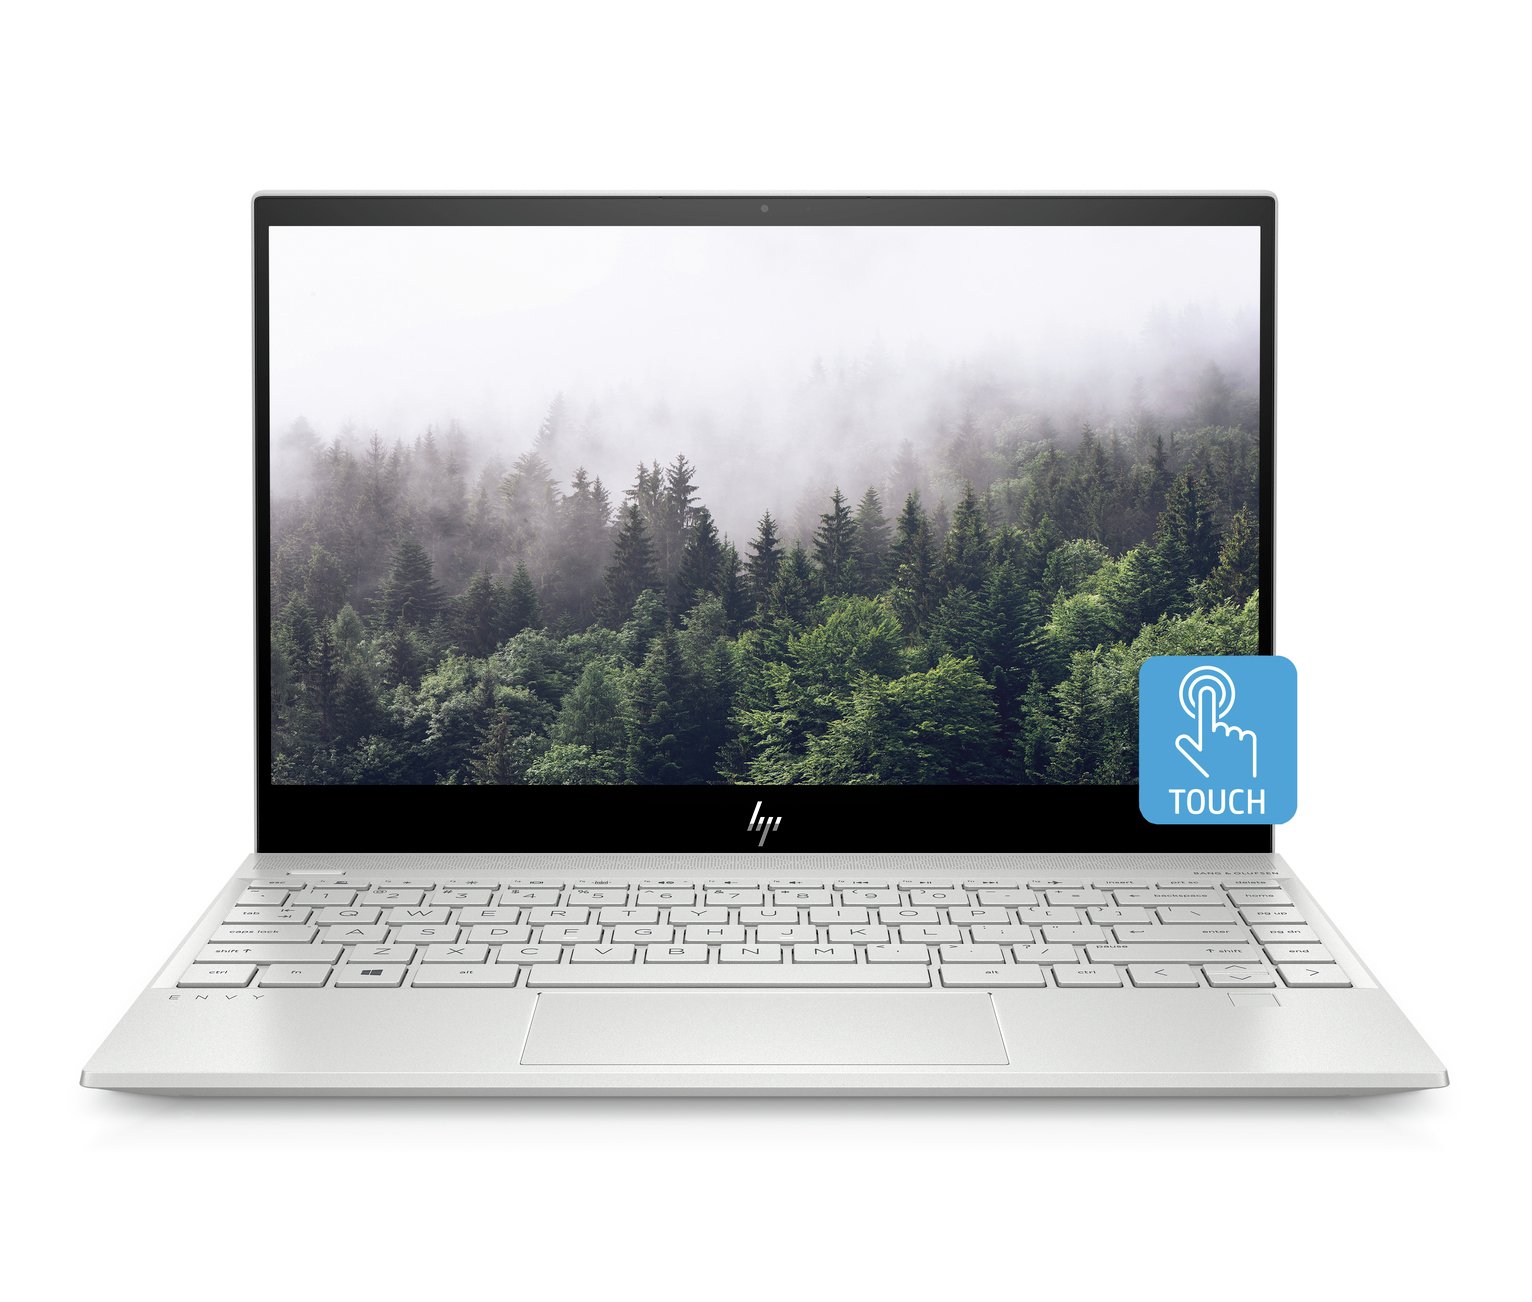 HP Envy 13 Inch i5 8GB 256GB Touchscreen Laptop - Silver